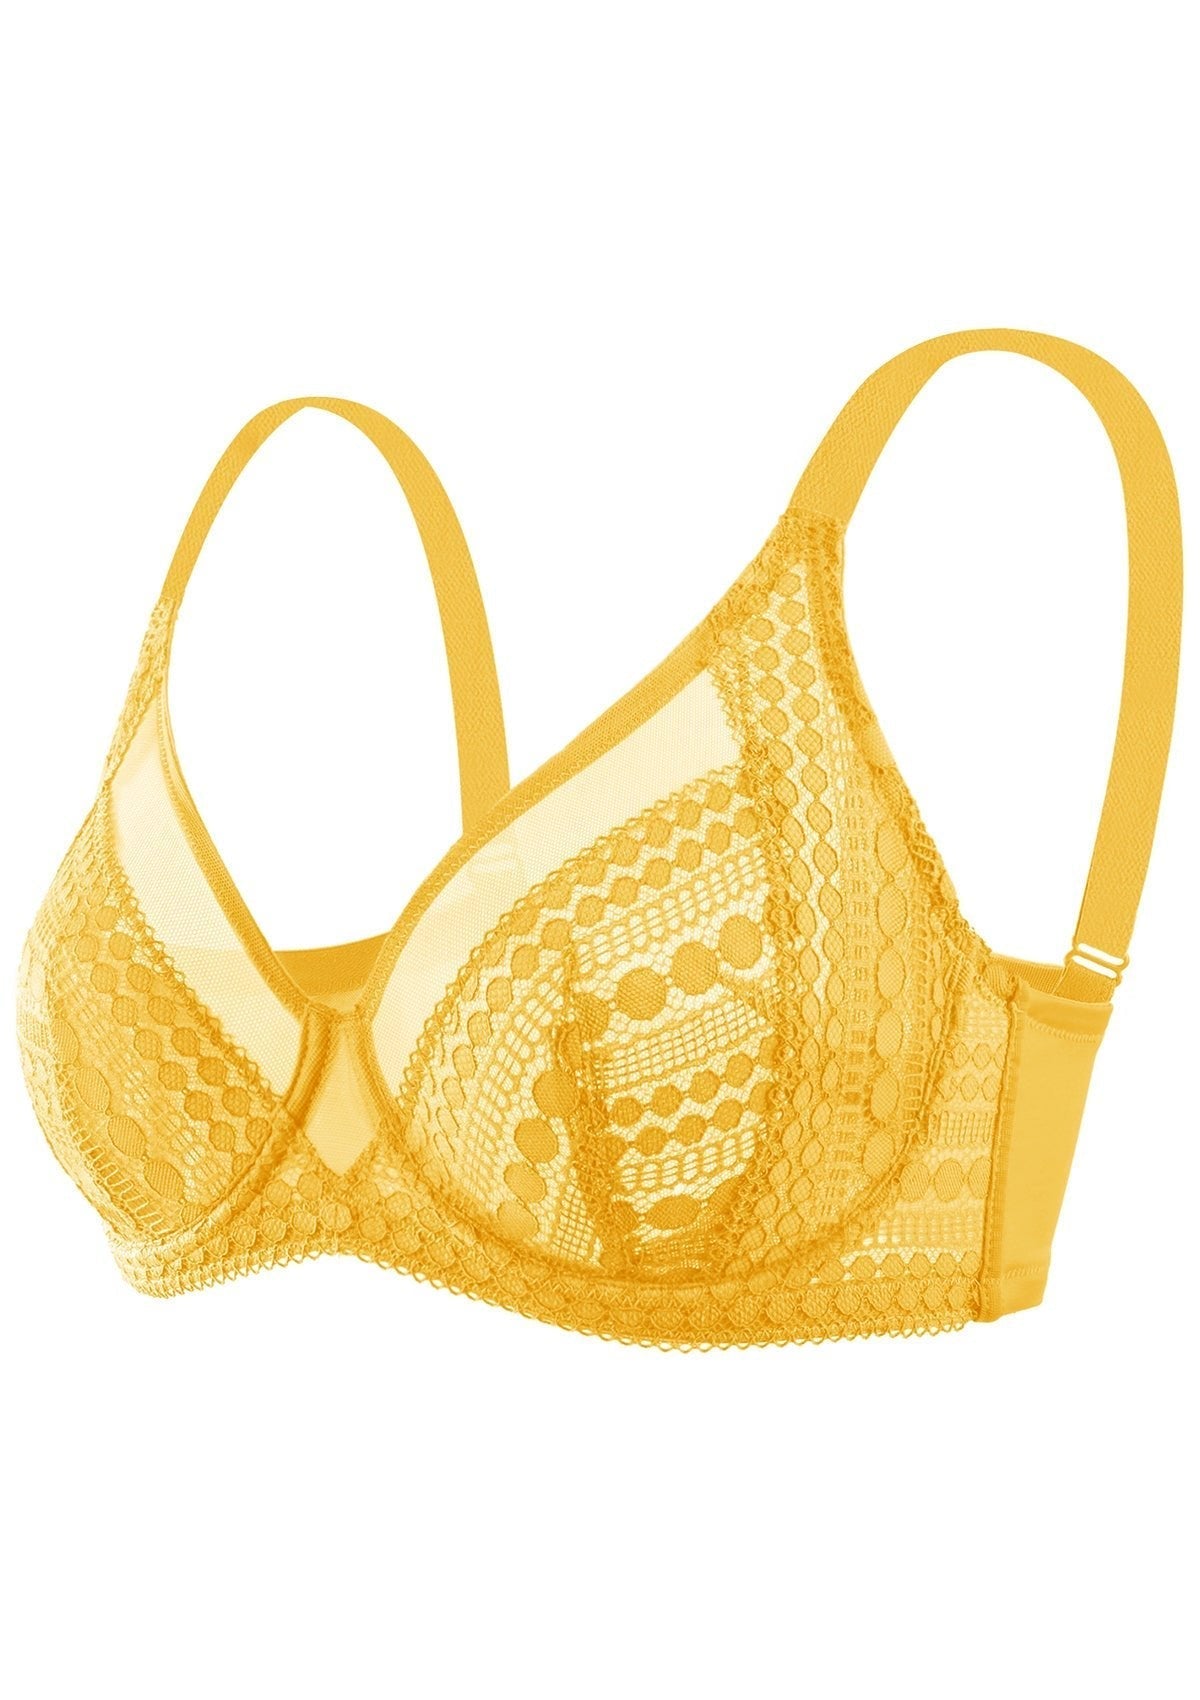 HSIA Heroine Lace Unlined Bra: Bra That Hides Back Fat - Plus Size - Yellow / 38 / C